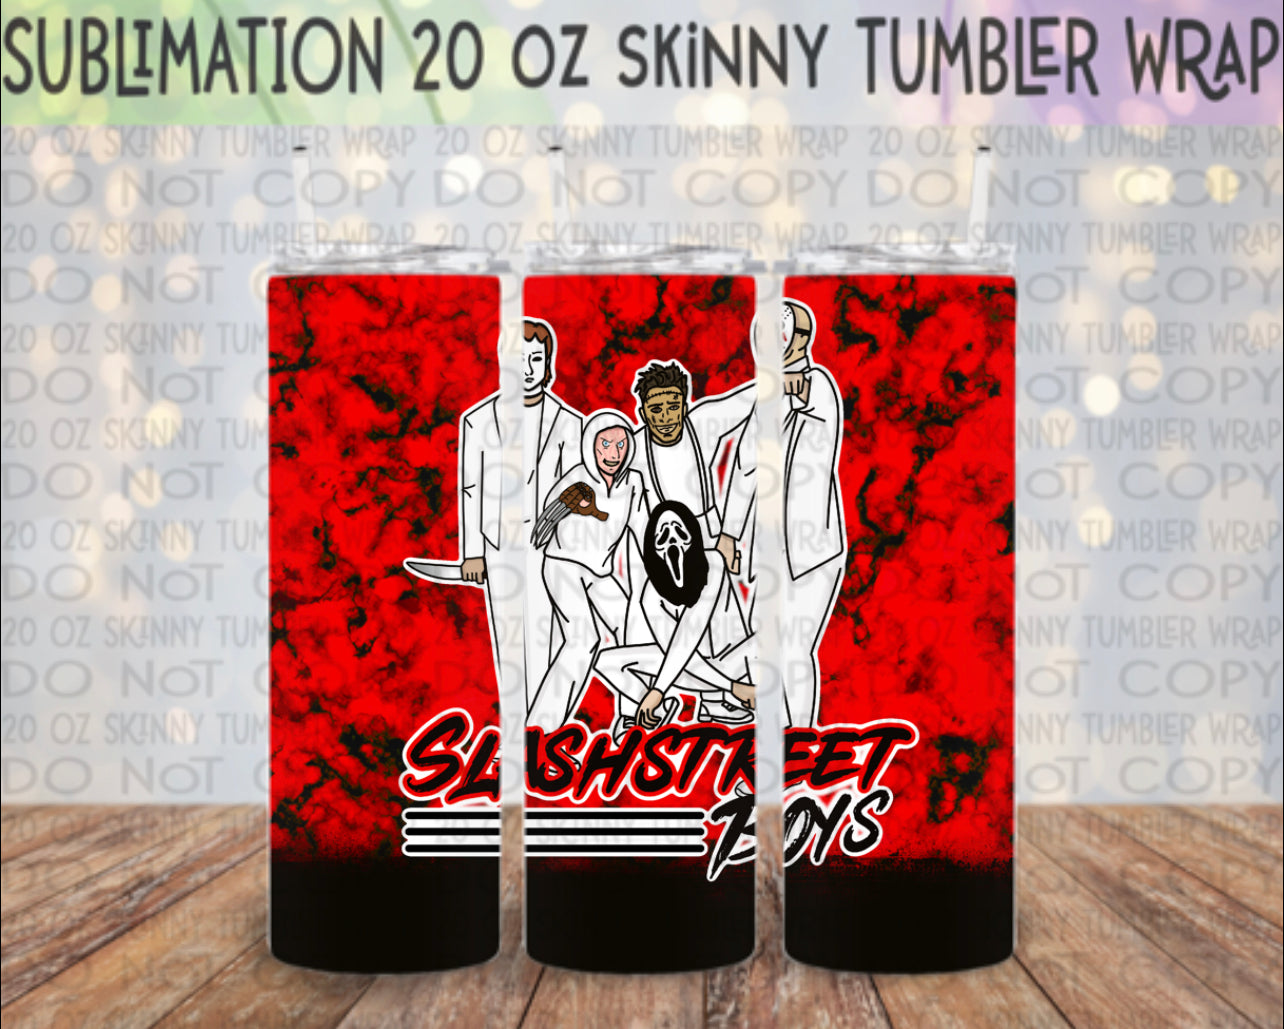 Slashstreet Boys 20 Oz Skinny Tumbler Wrap - Sublimation Transfer - RTS